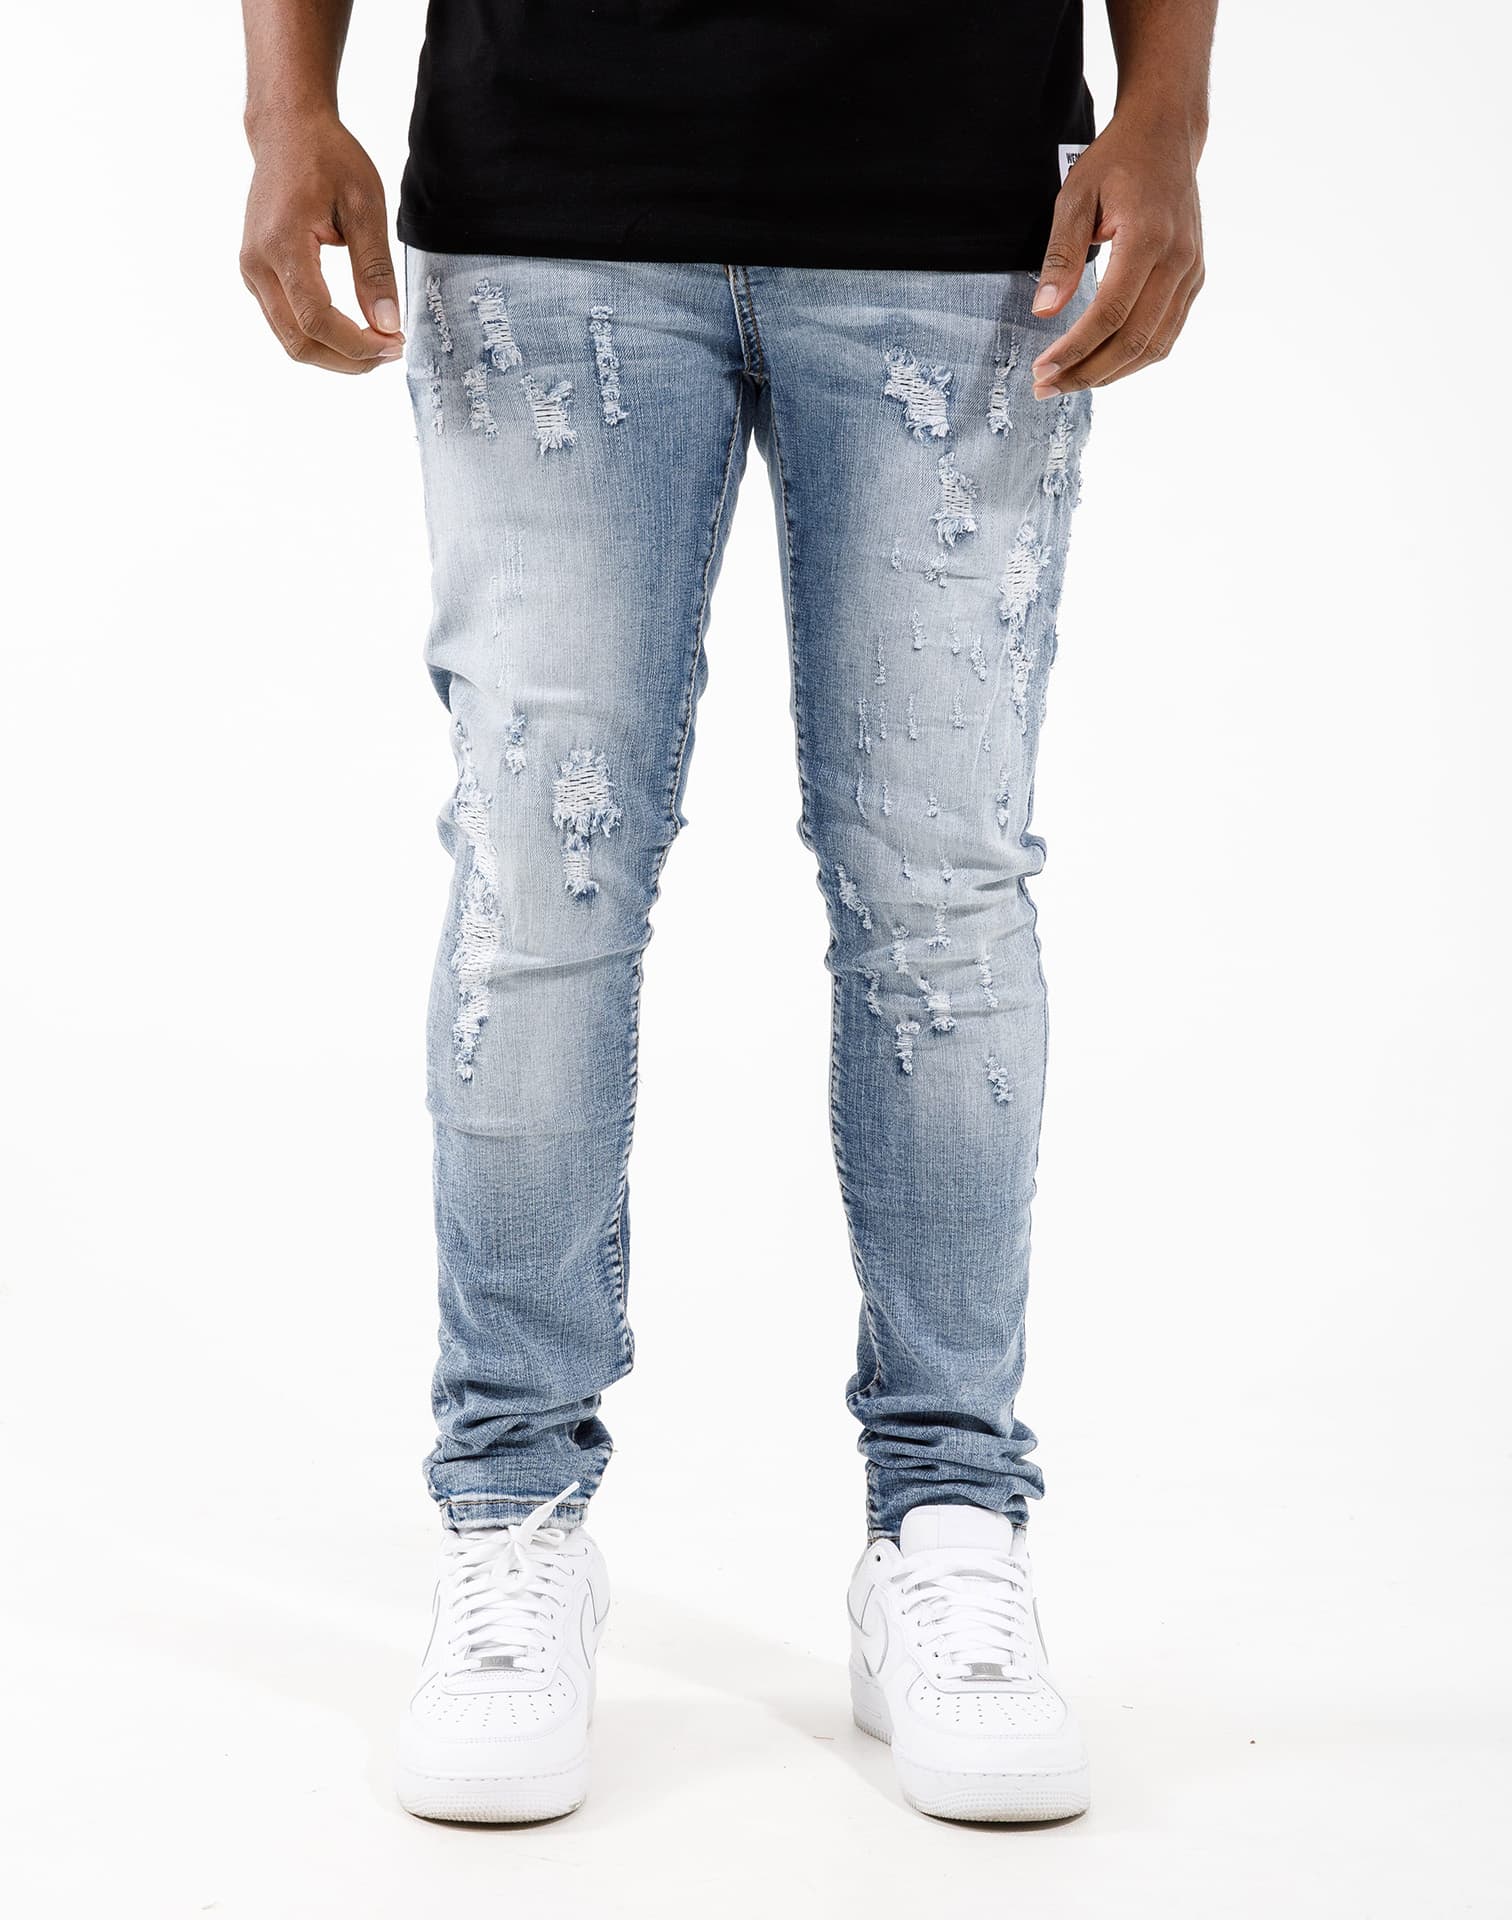 United Cotes Industrial Indigo Jeans  - Blue - Size: 28